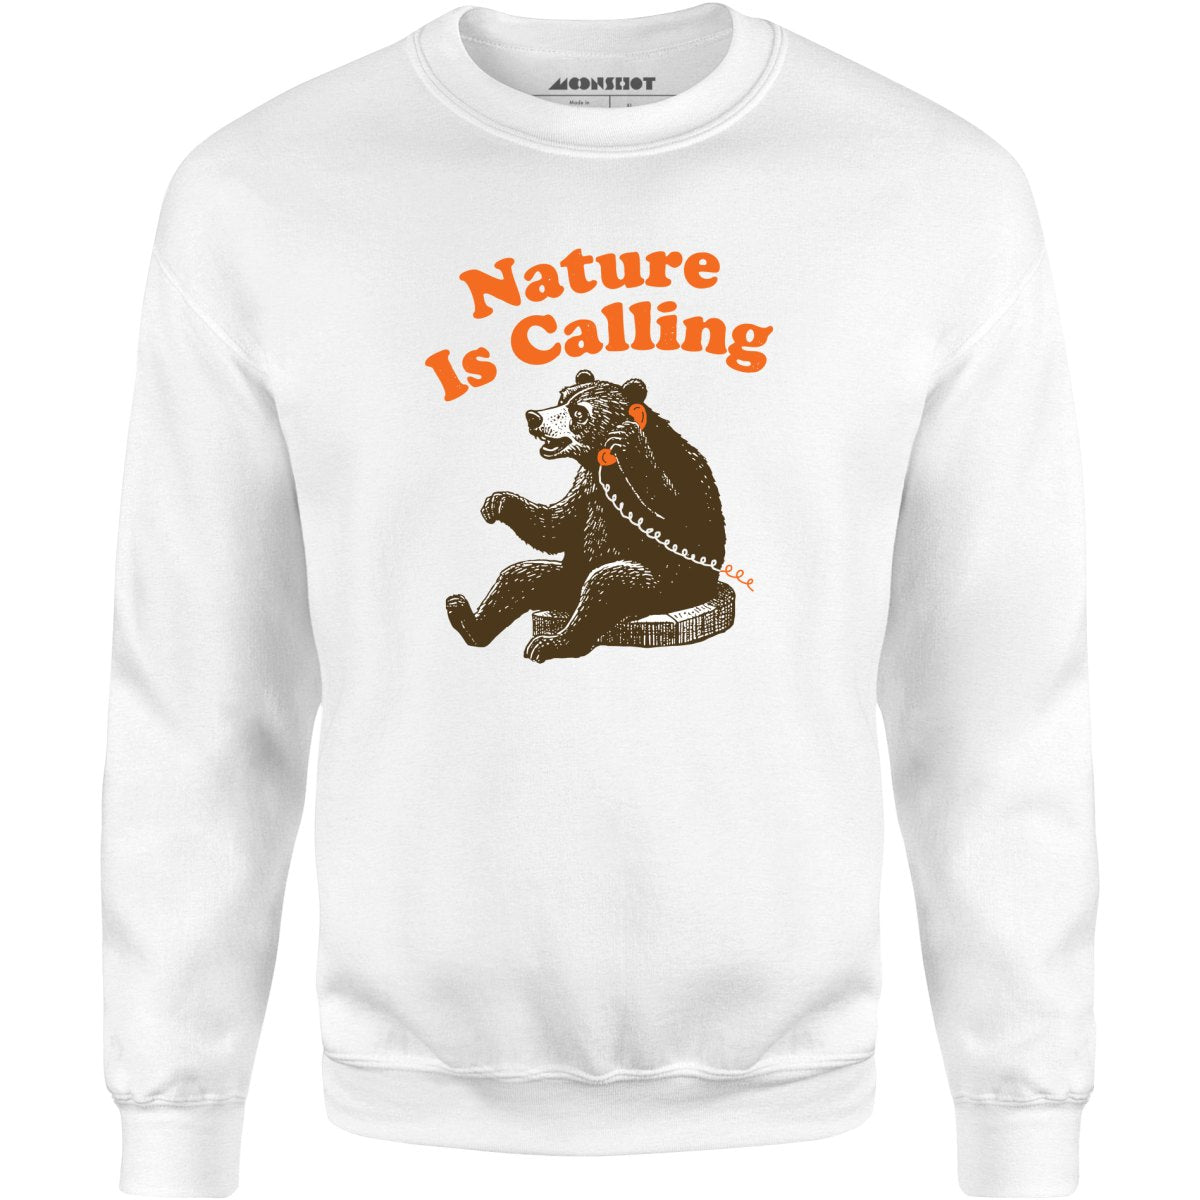 Nature is Calling - Unisex Sweatshirt